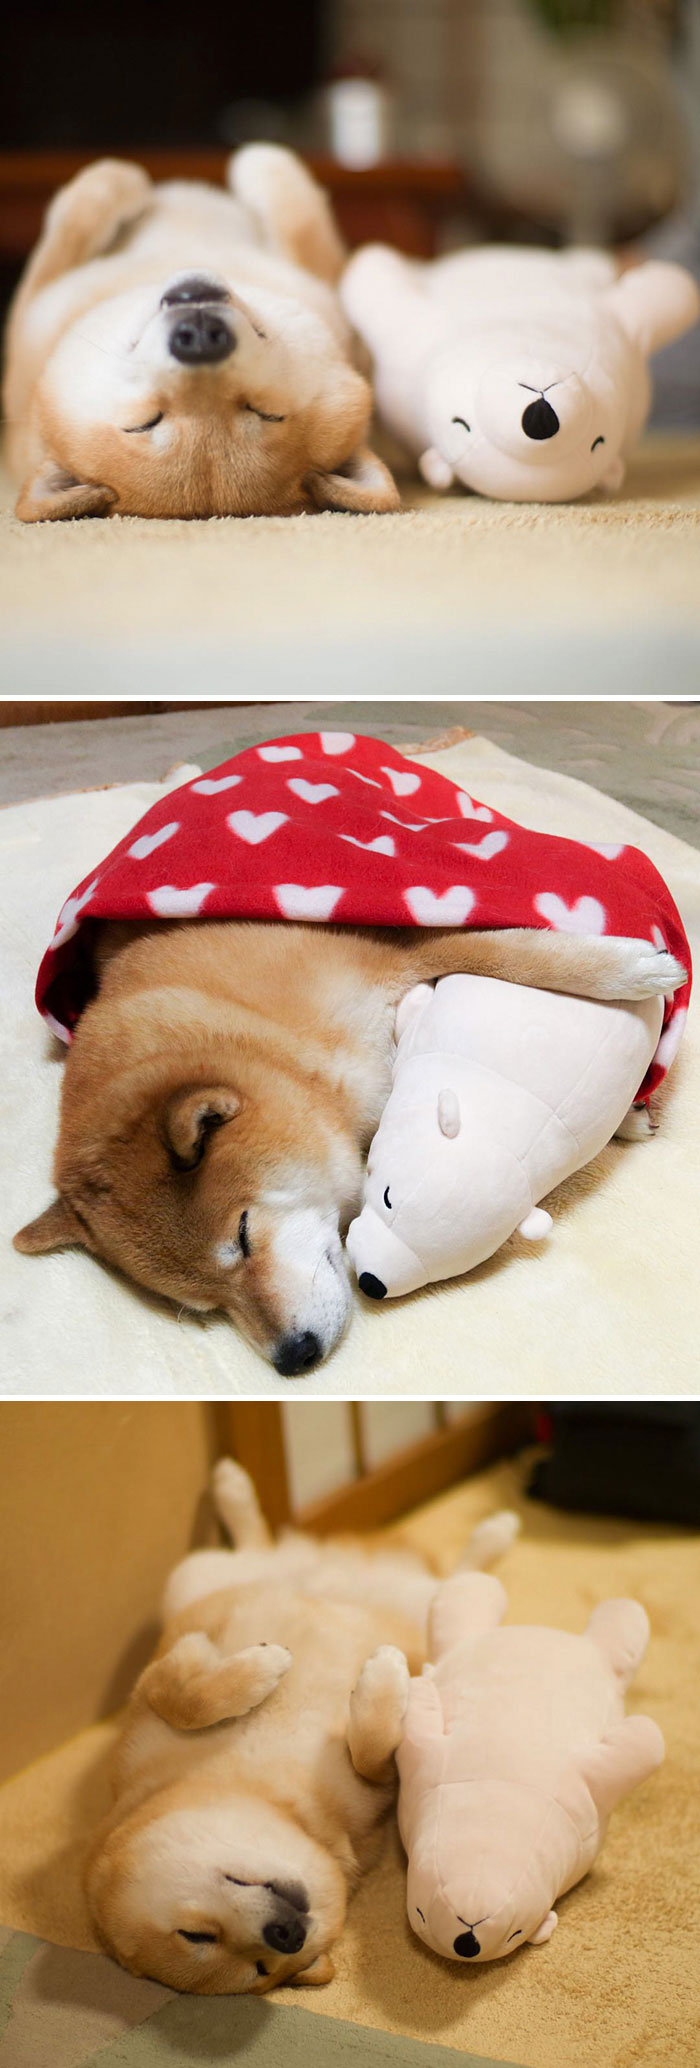 Shiba Inu Maru Loves To Sleep, Especially With His Little Stuffed Polar Bear Toy